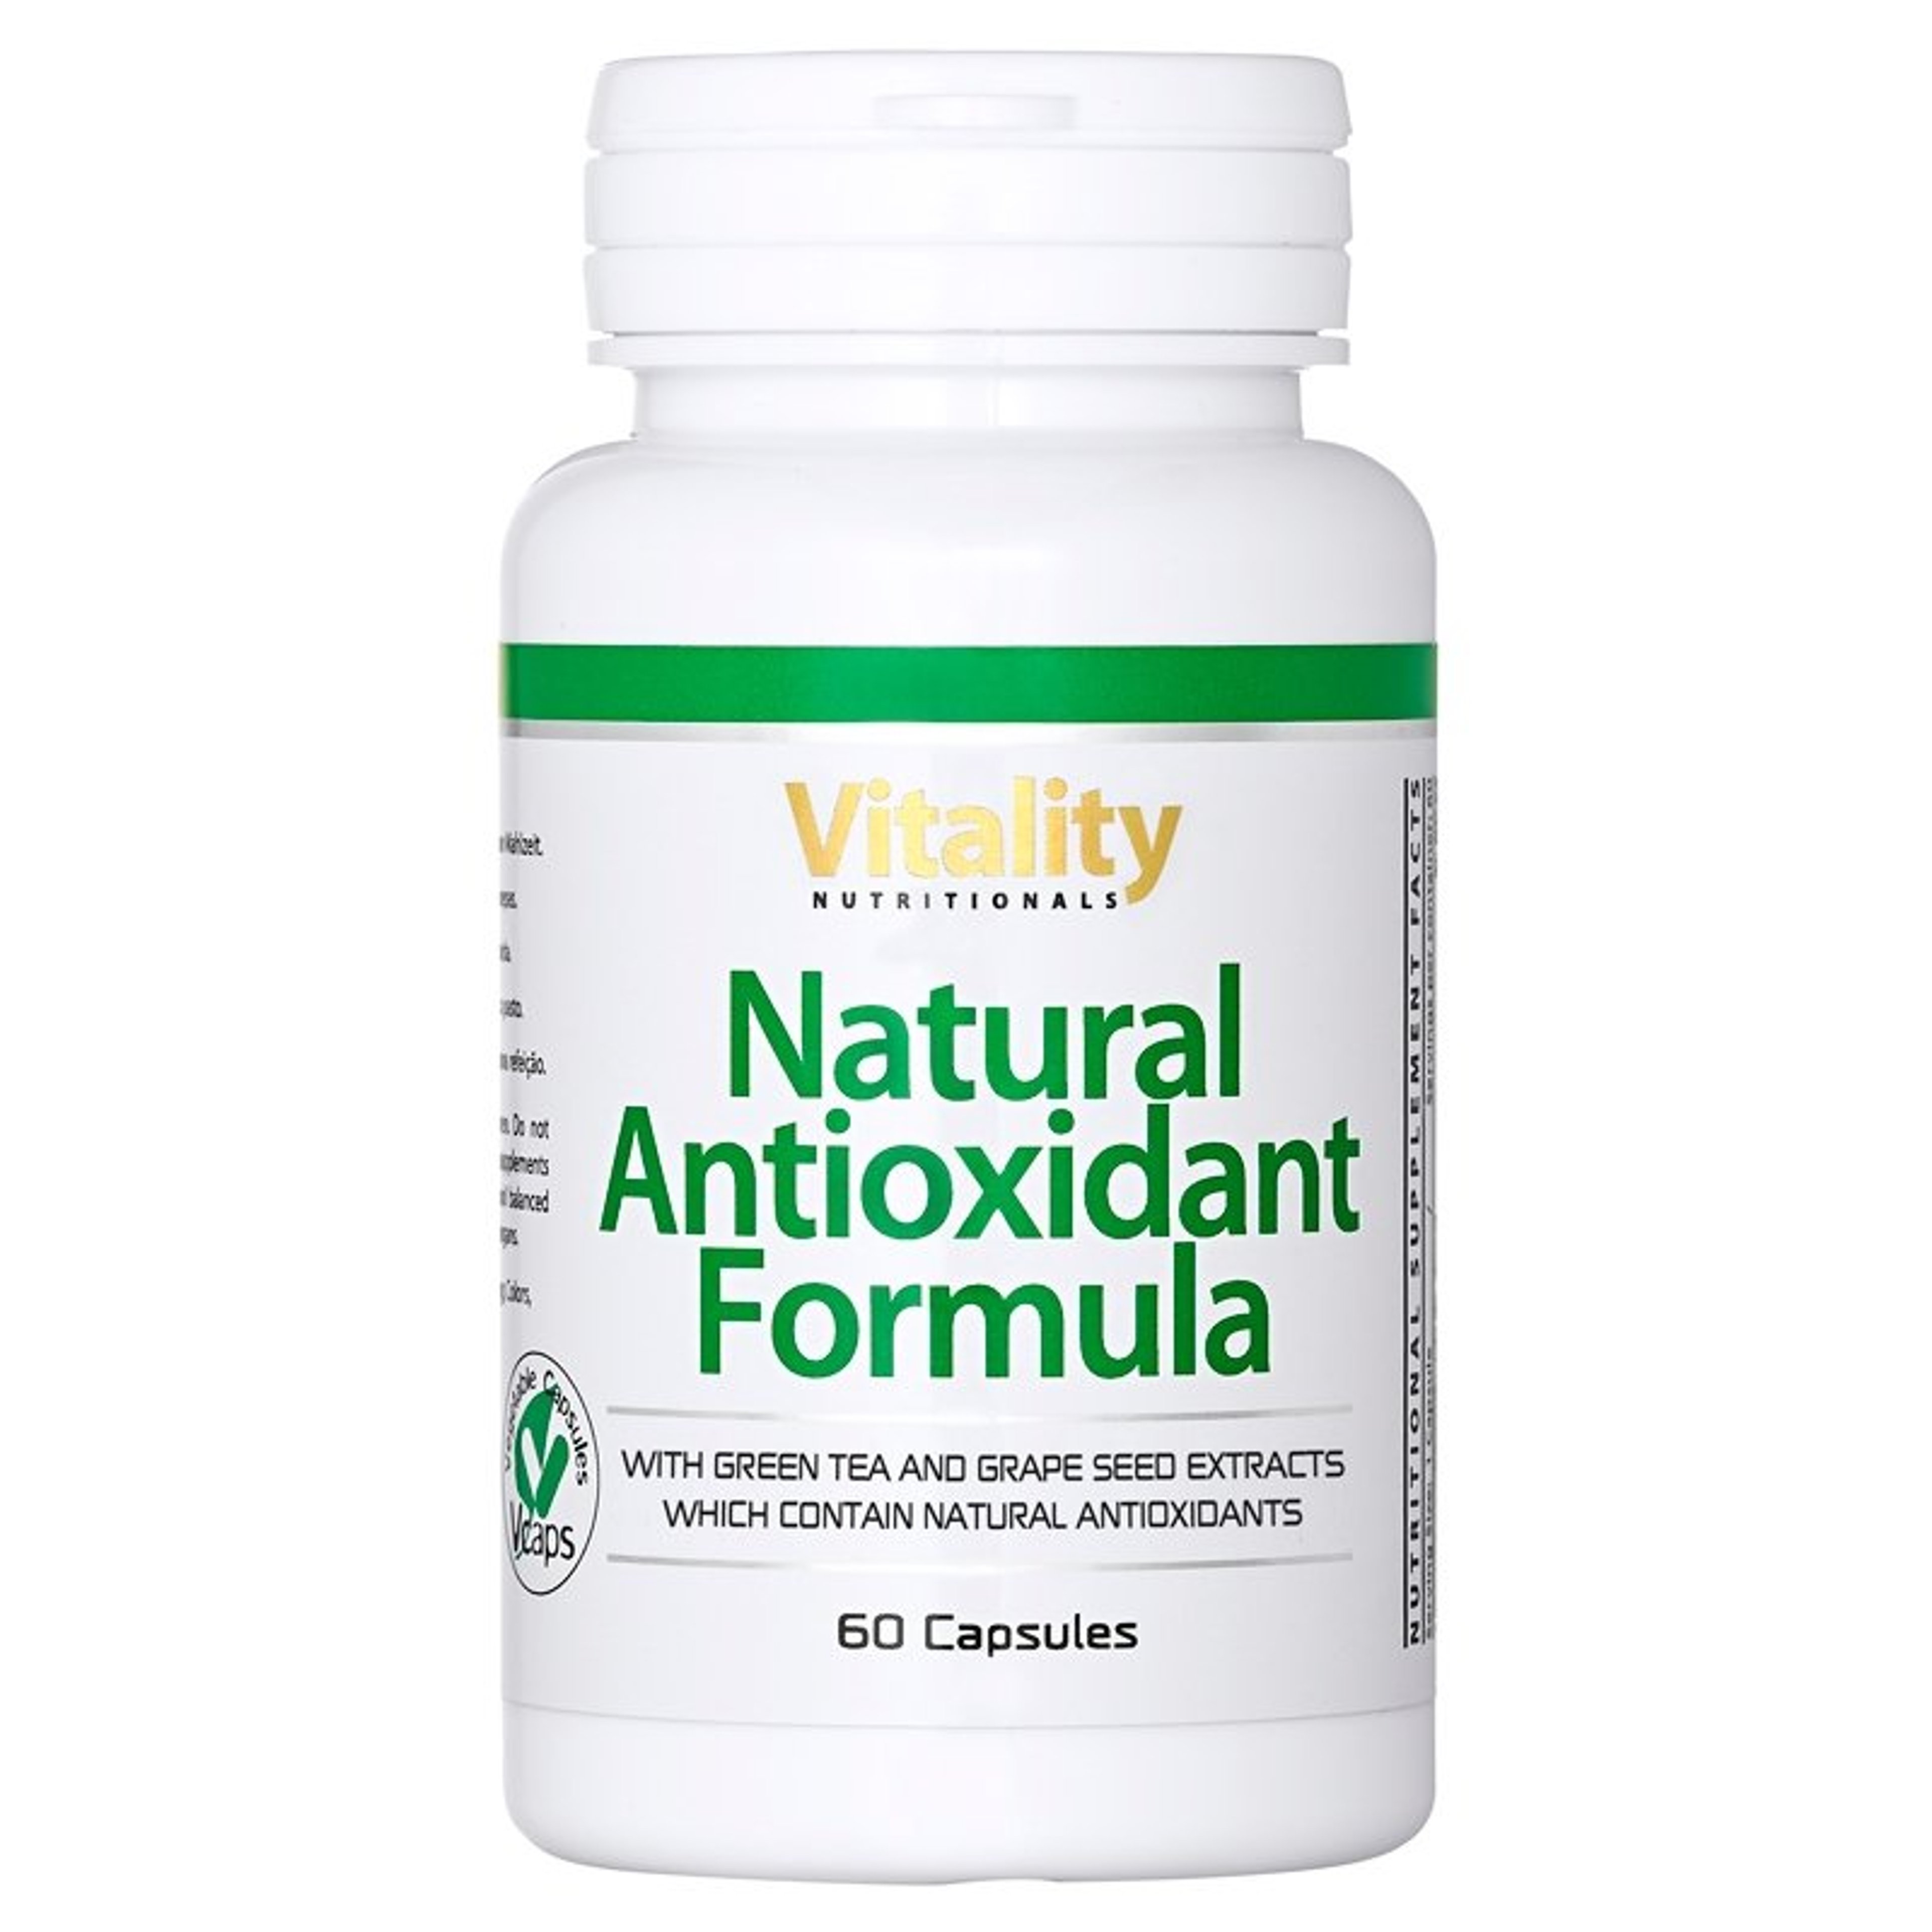 vitality-nutritionals-natural-antioxidant-formula_3.jpg